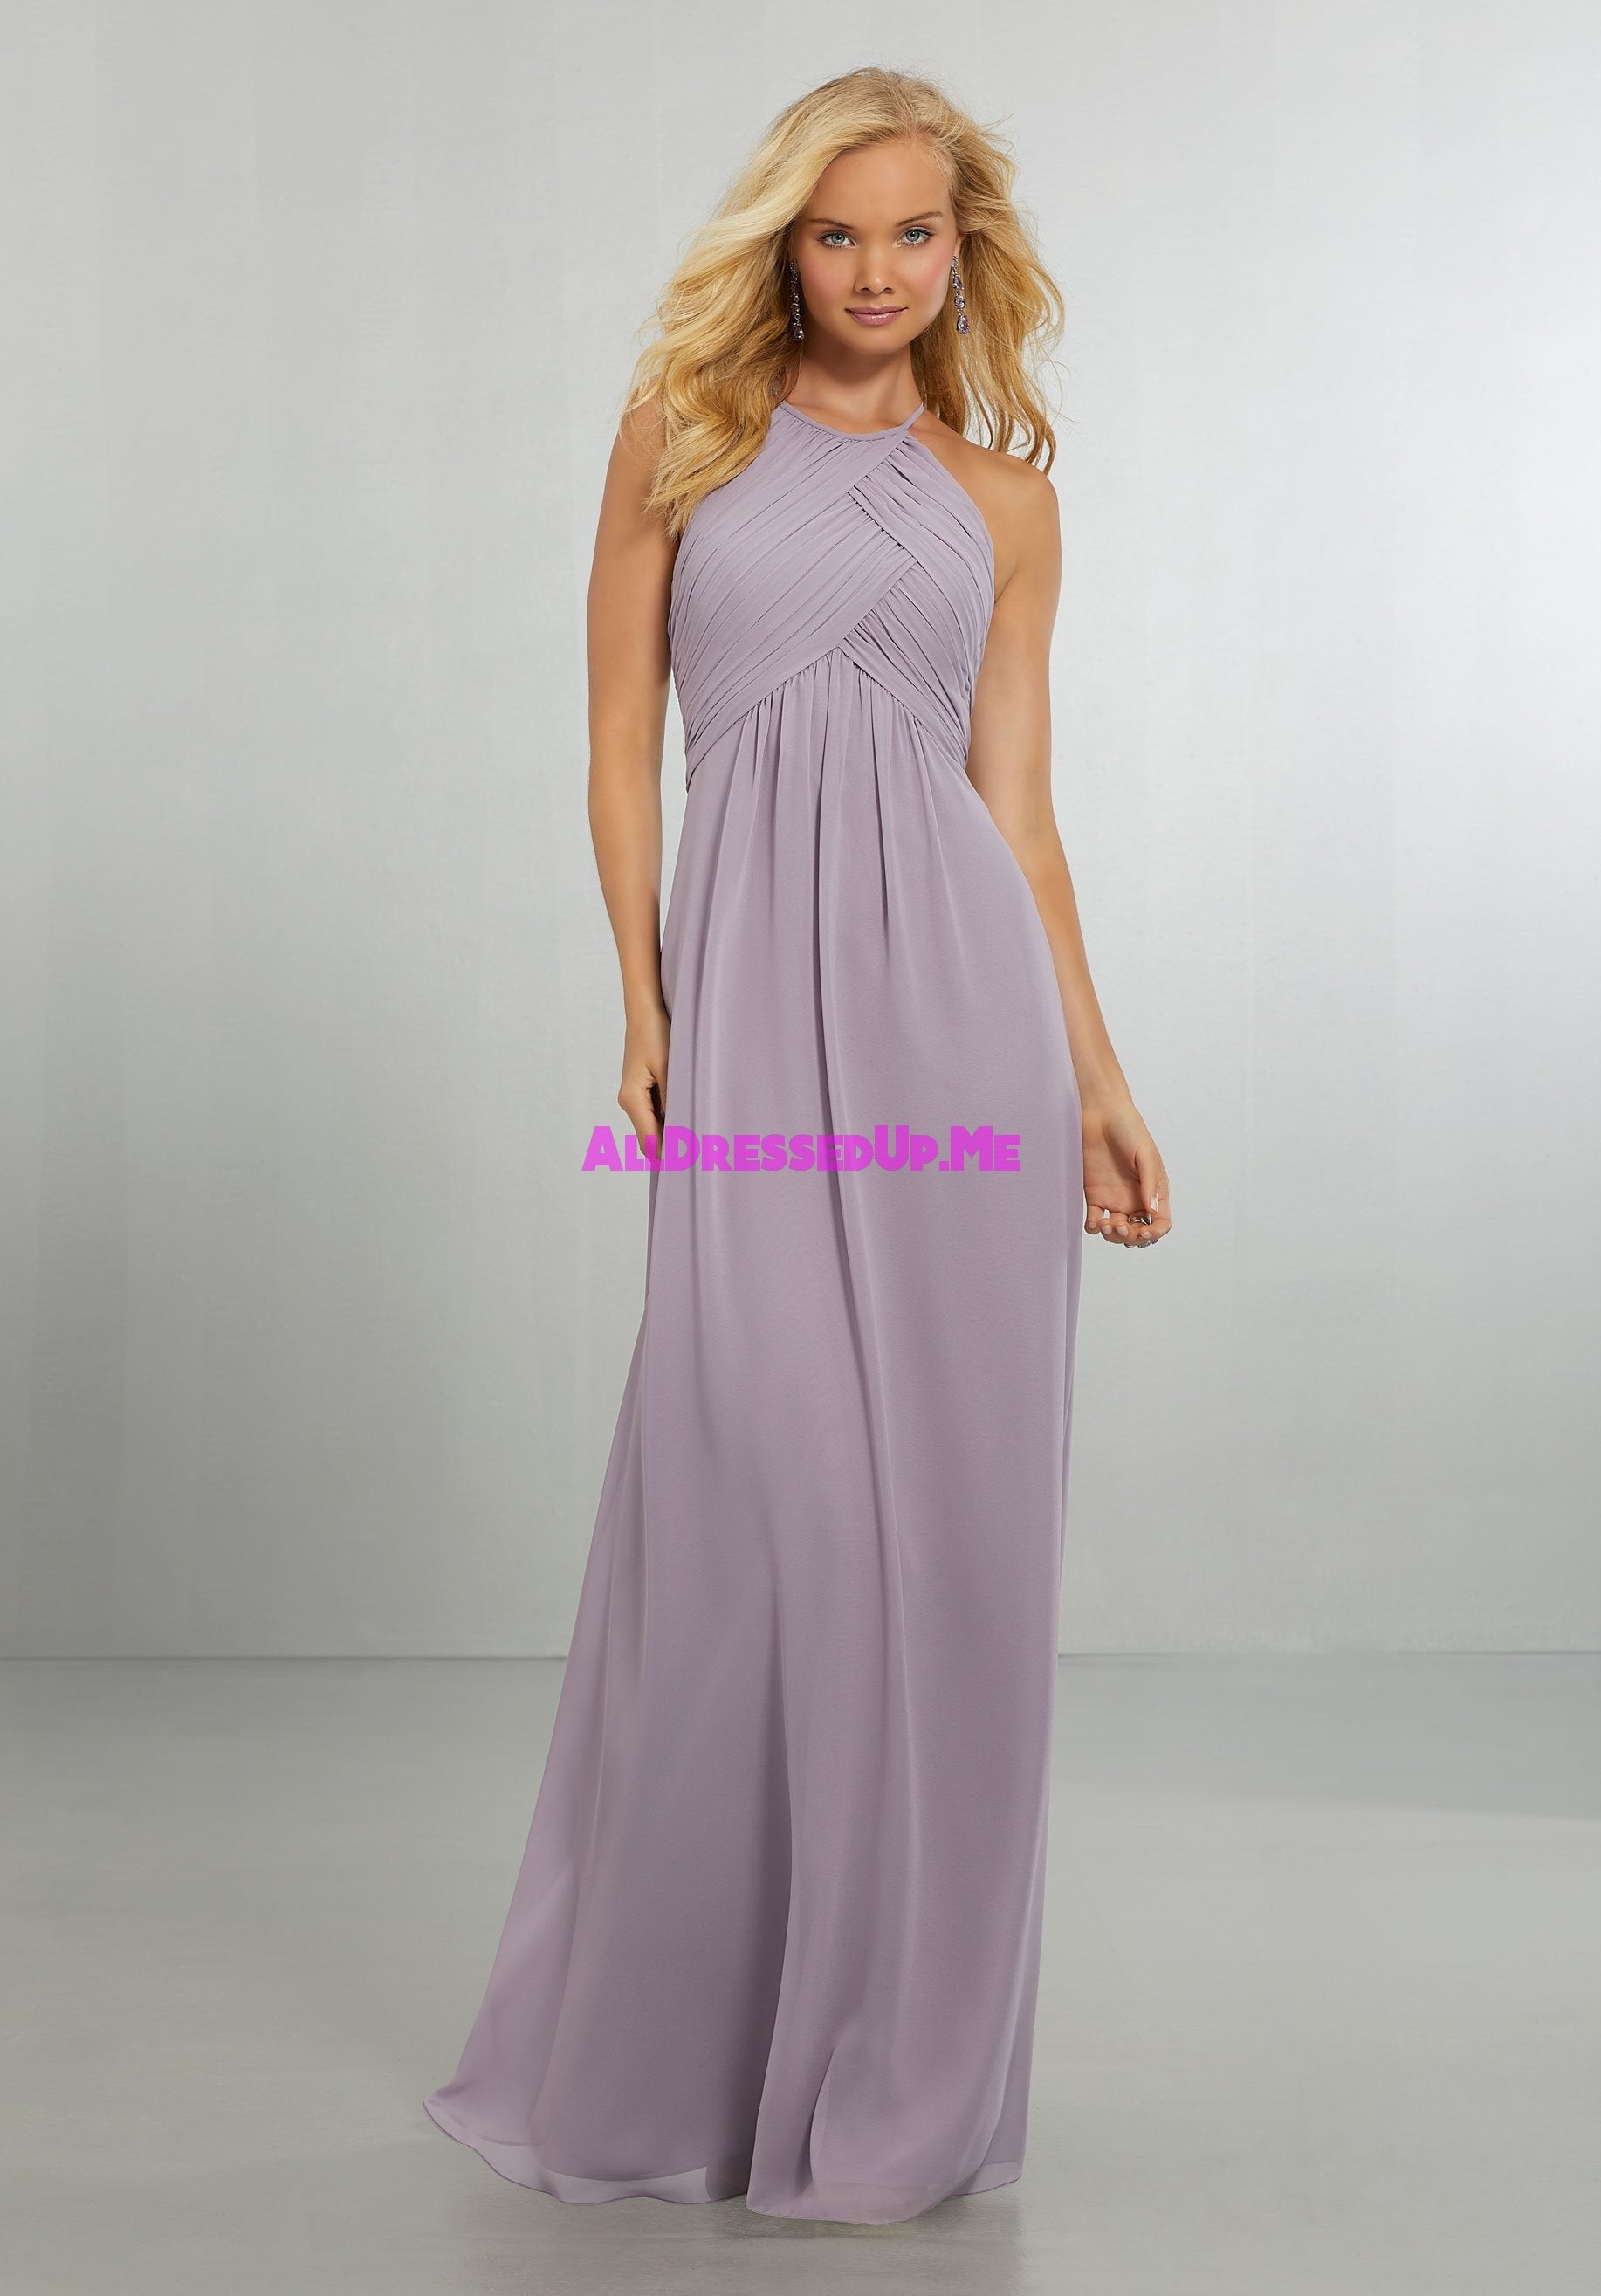 Morilee - 21570 - Cheron's Bridal, Bridesmaids Dress